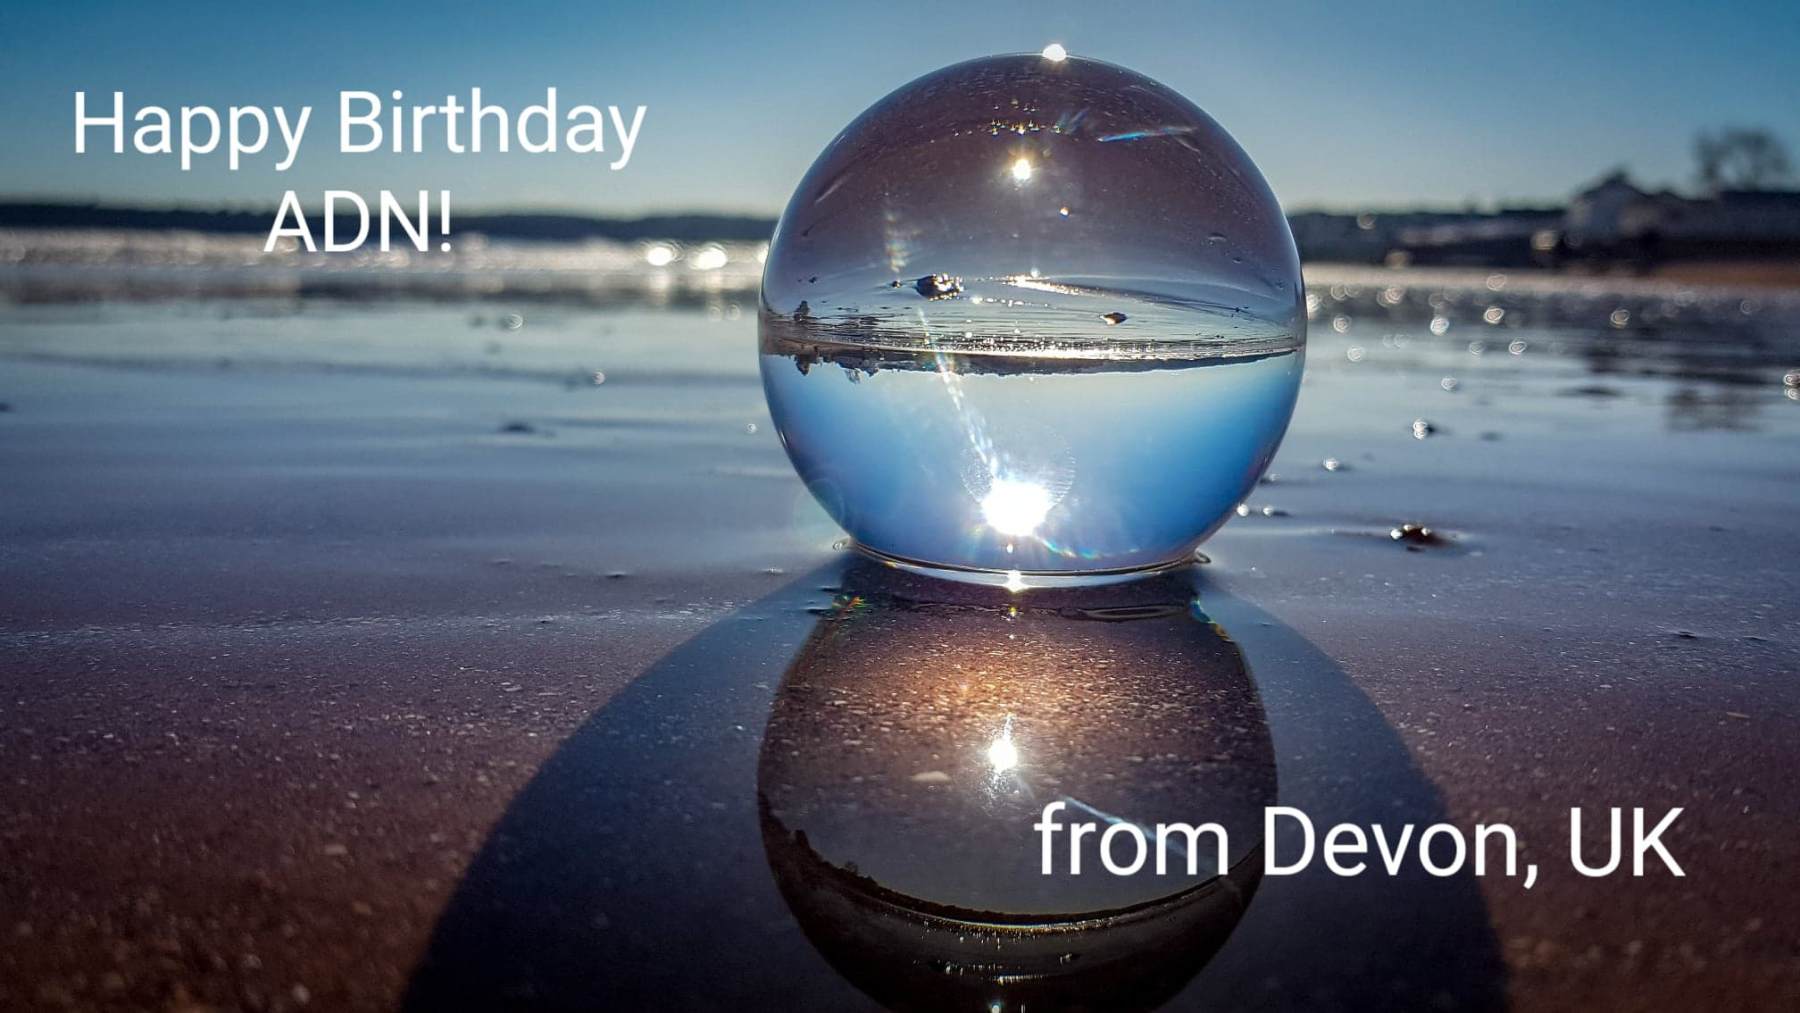 Birthday Wishes from Devon, UK